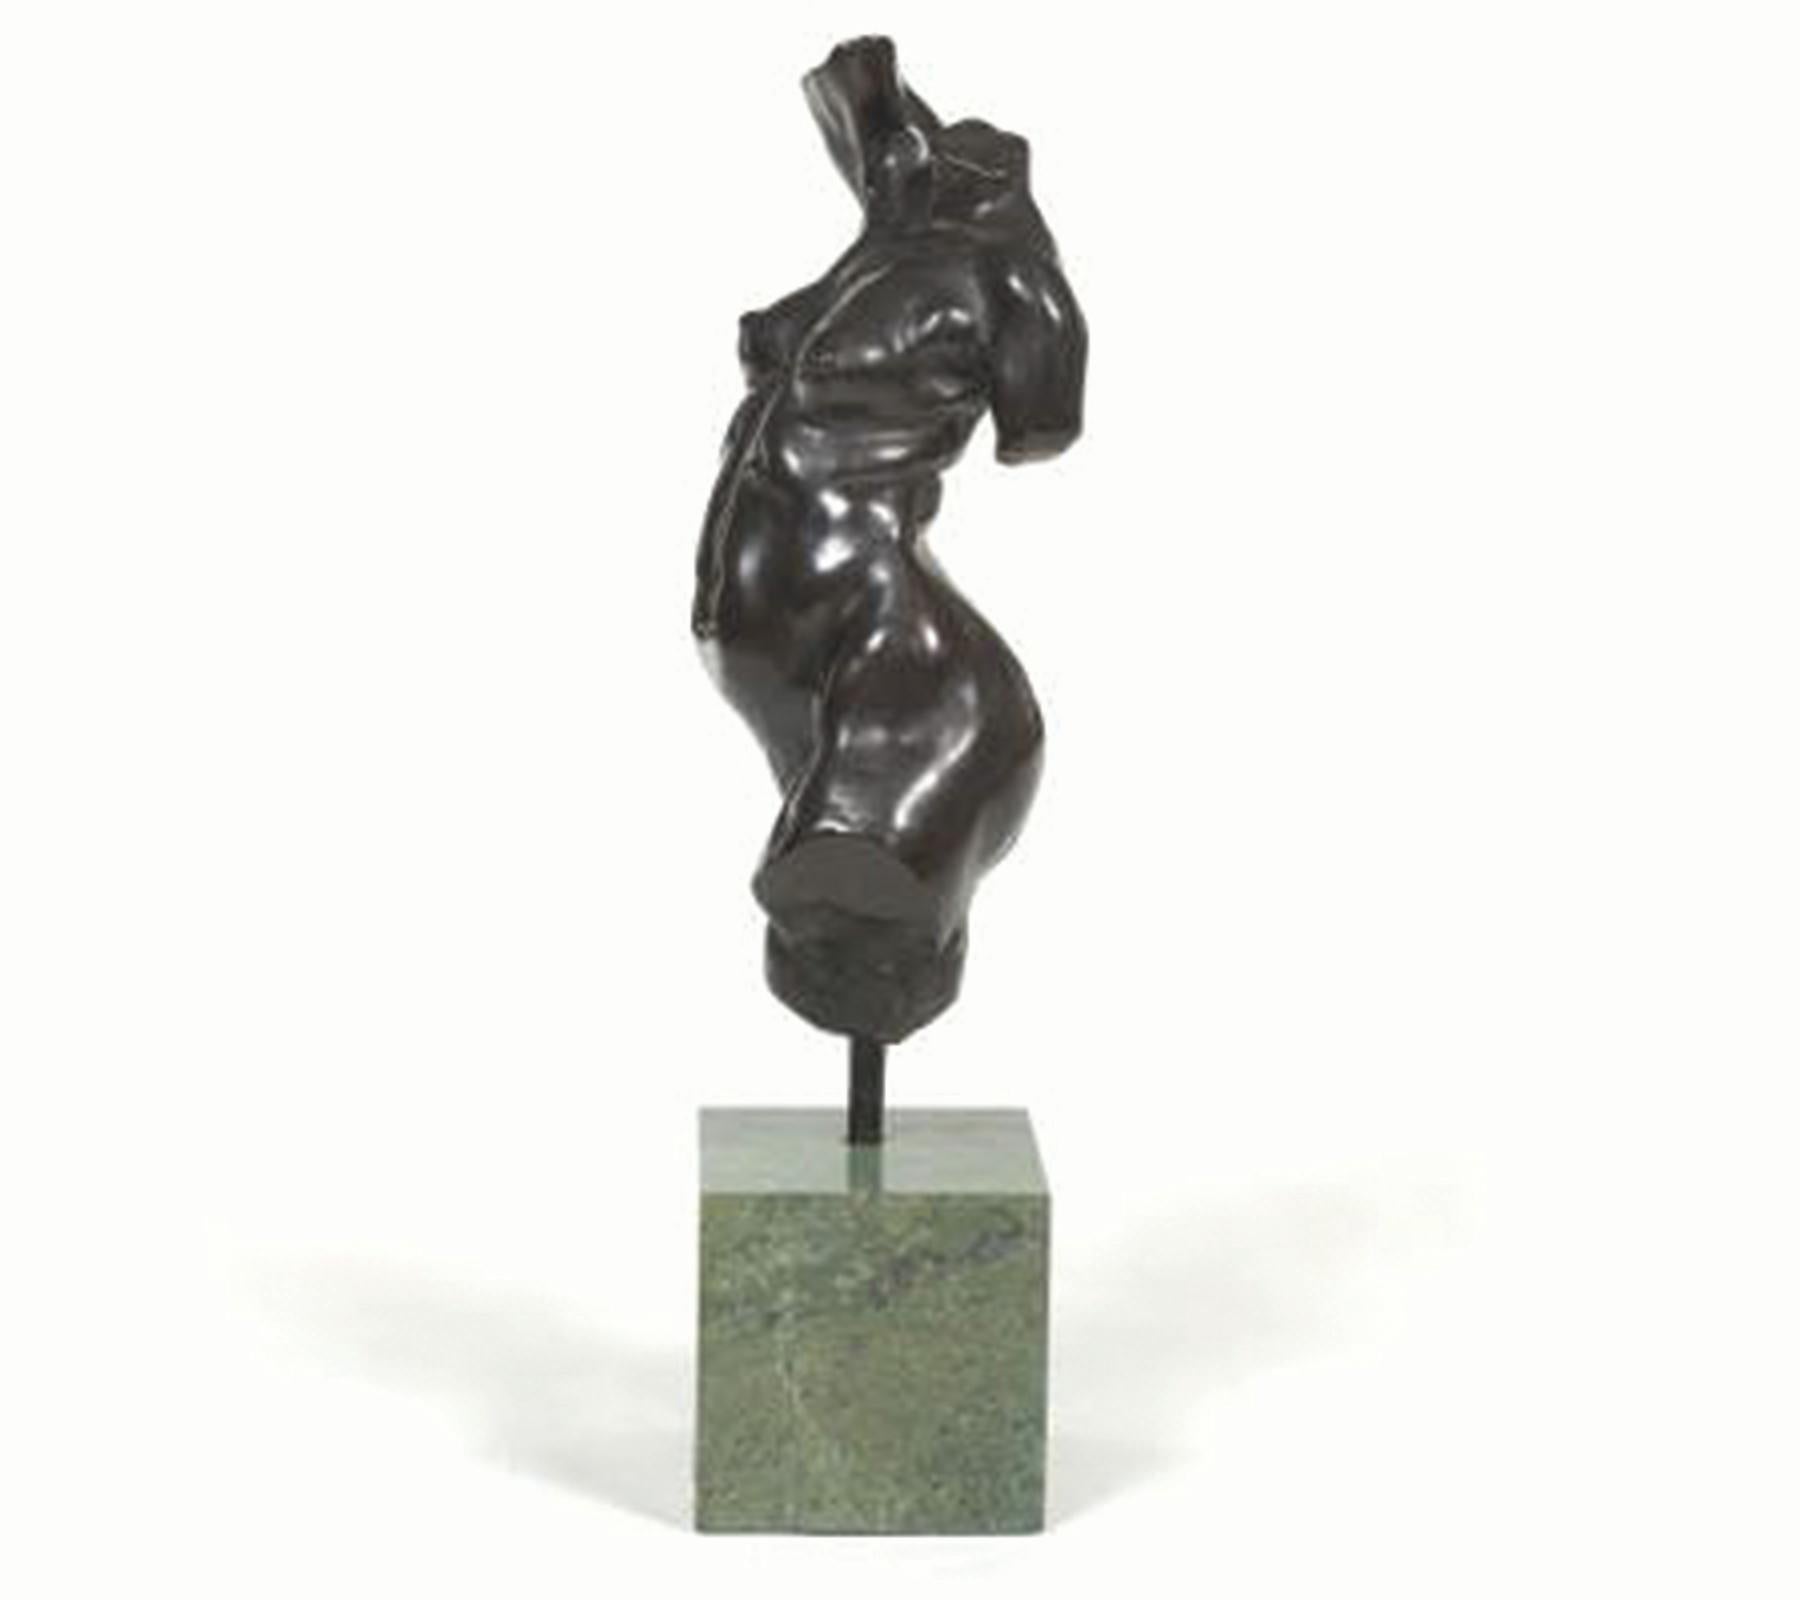 Torso desnudo femenino Escultura de bronce, Artista estadounidense contemporáneo del siglo XX - Figurative Sculpture Oro de Alan Cottrill